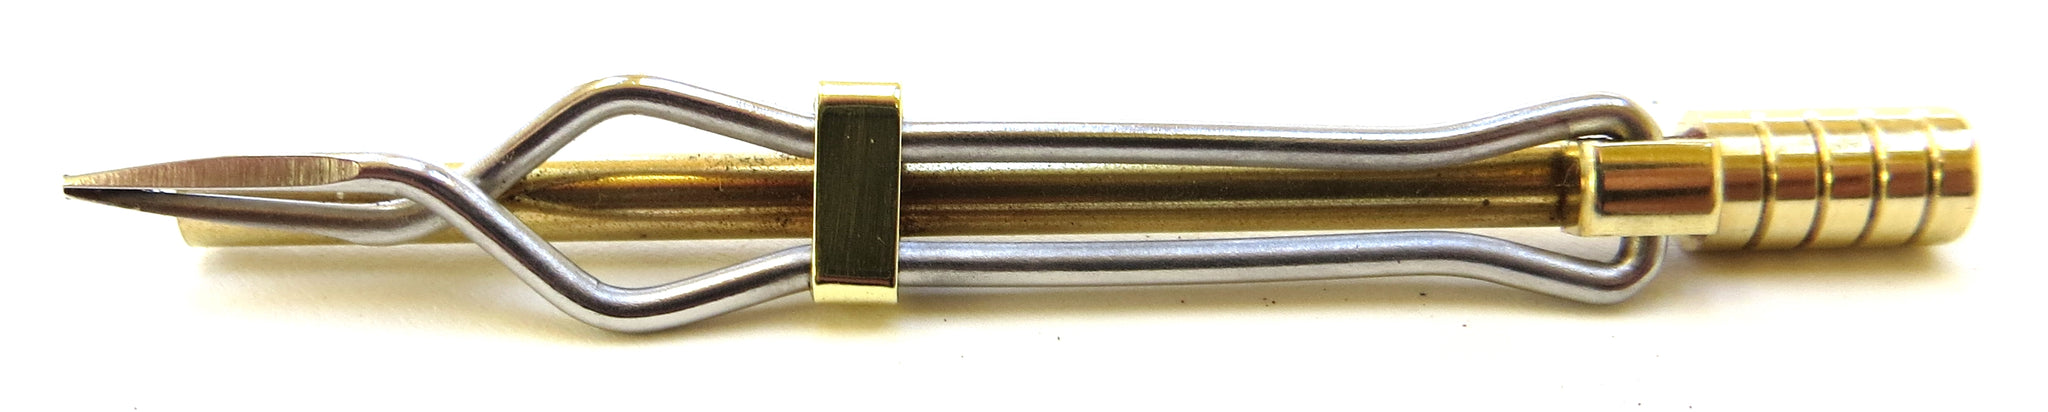 roach clip brass ring